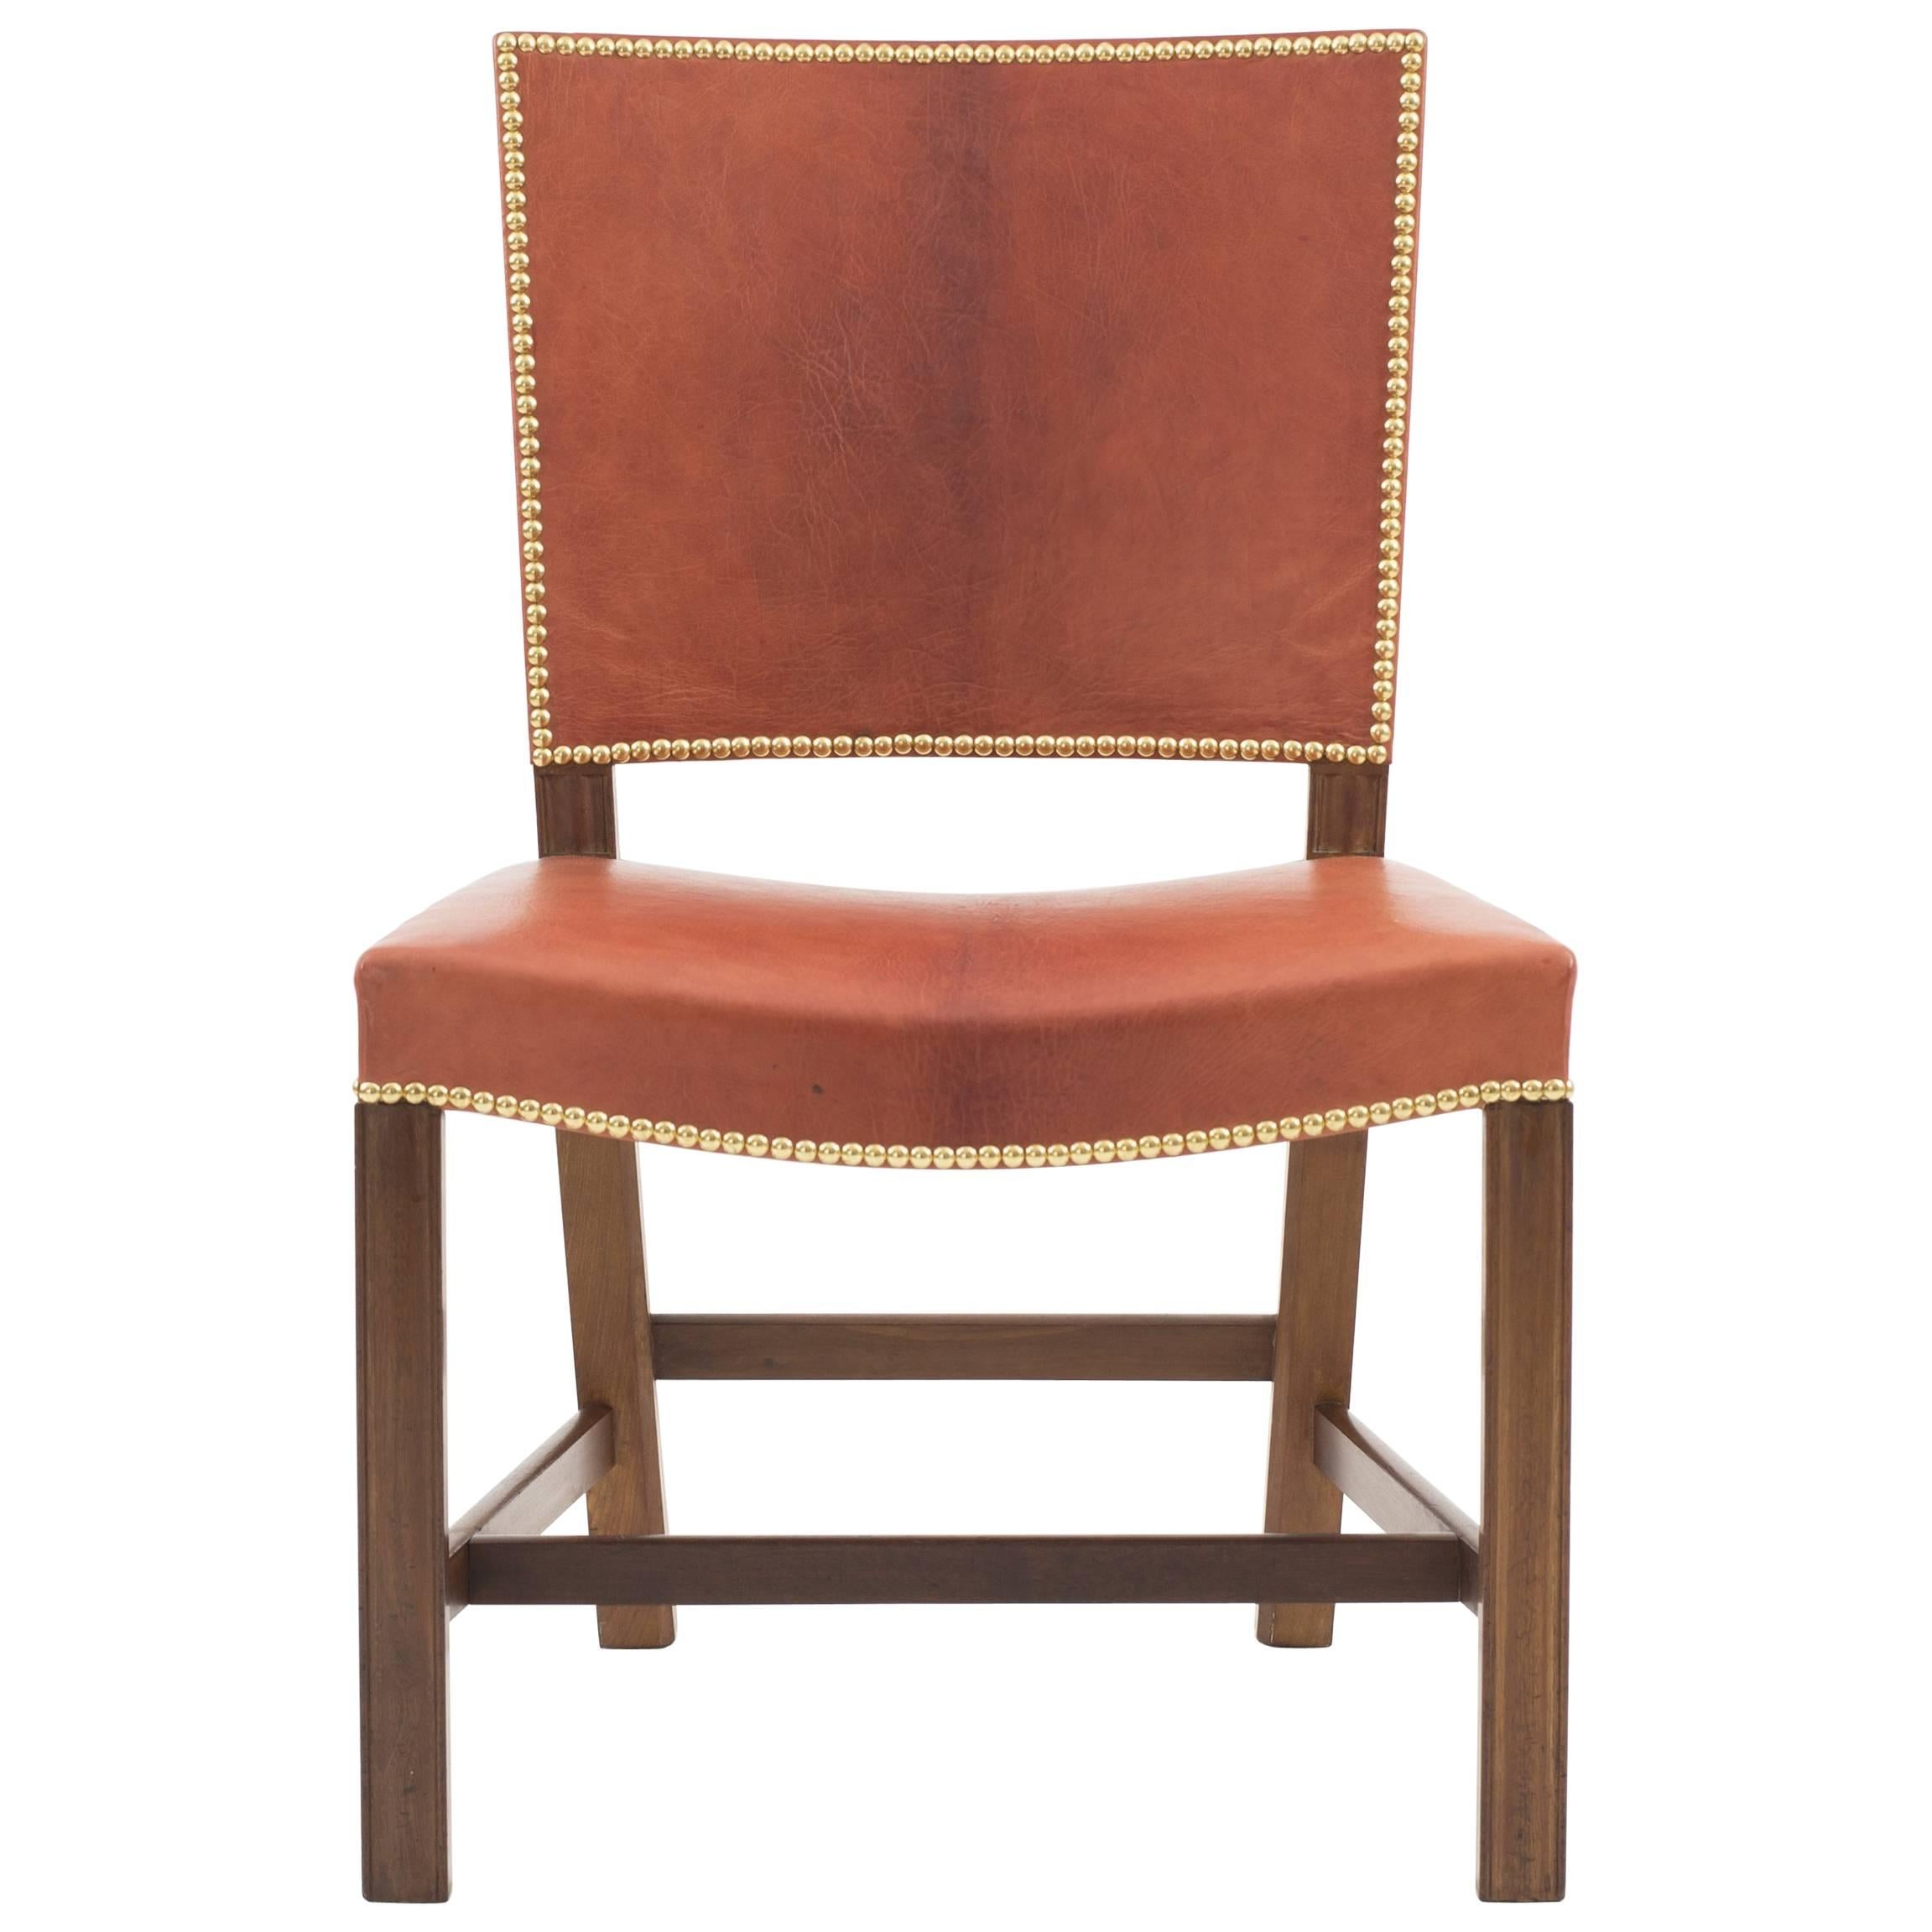 Kaare Klint Red Chair, Rud. Rasmussen, 1930s